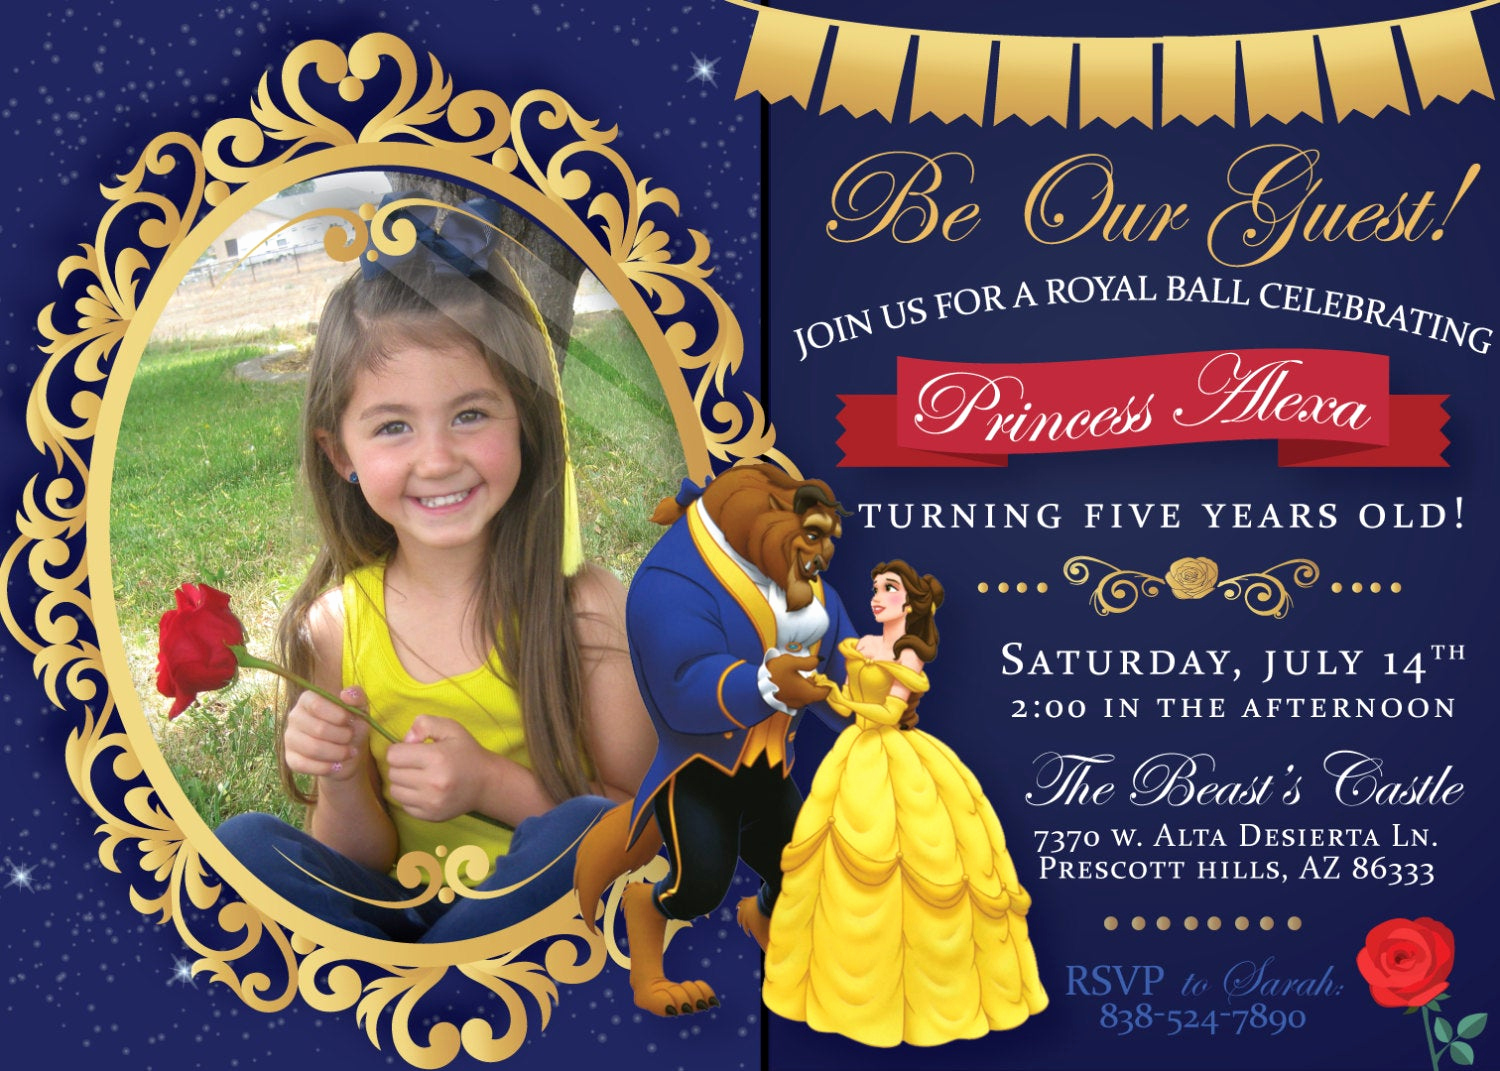 Beauty and the Beast Invitation Awesome Beauty and the Beast Birthday Party Printable Invitation